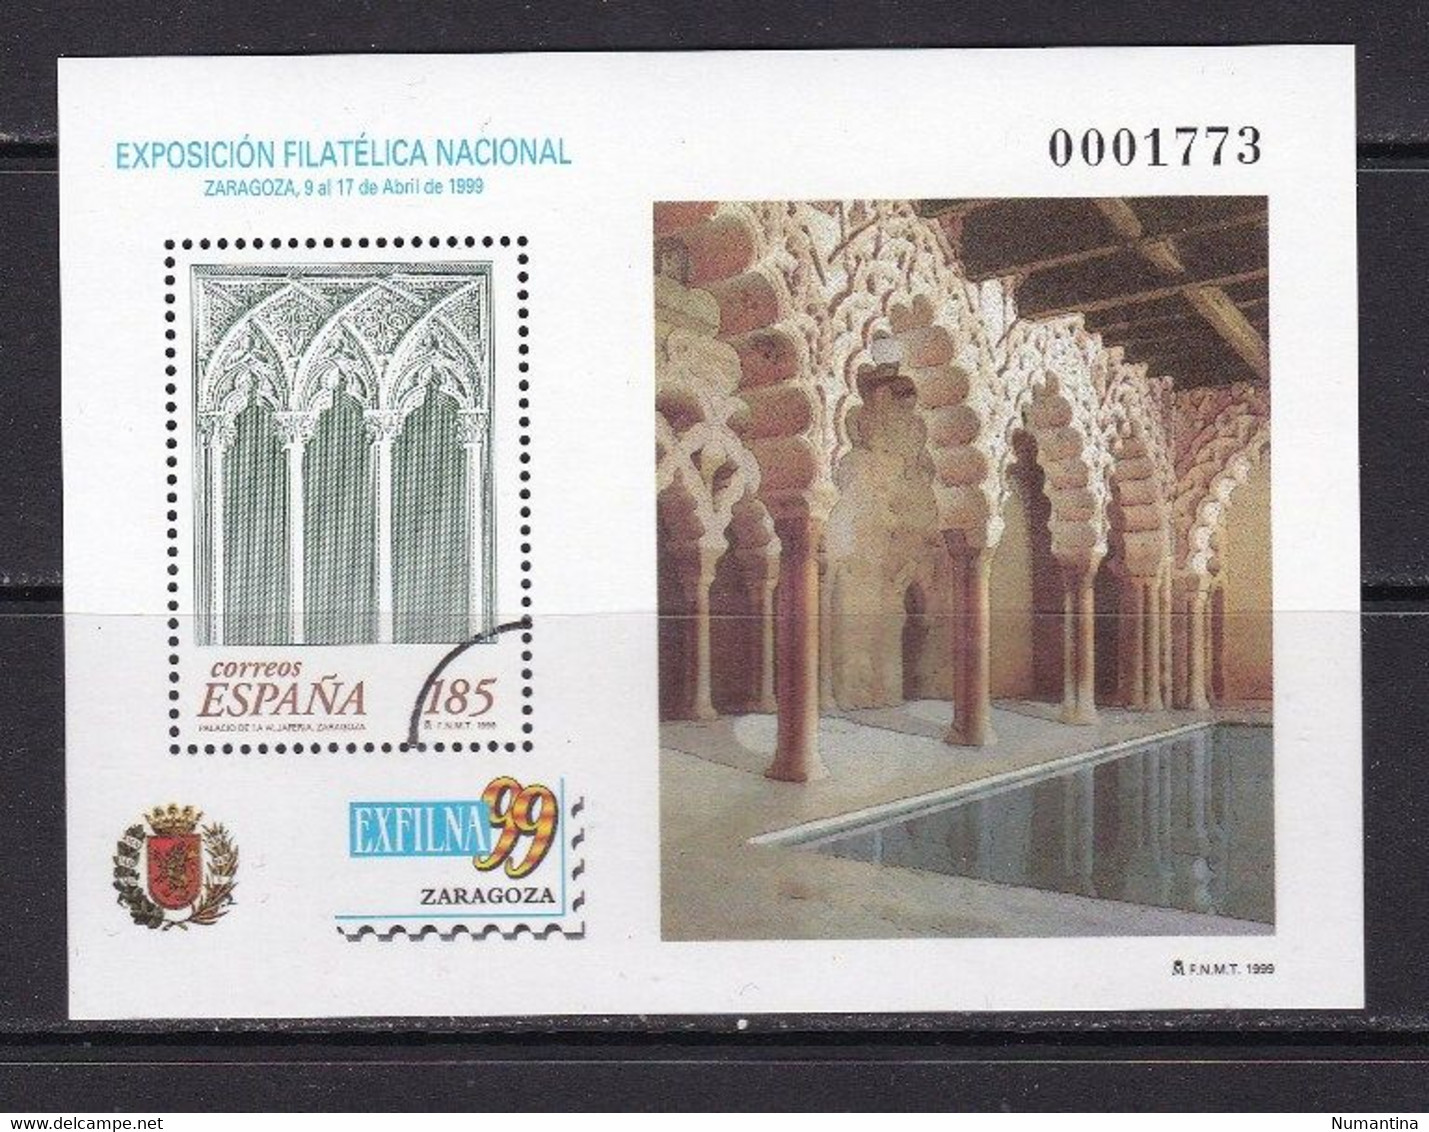 ESPAÑA - 1999 - Edifil 3625M - MUESTRA - Exfilna 99 - Valor Catalogo 24 € - Blocs & Hojas